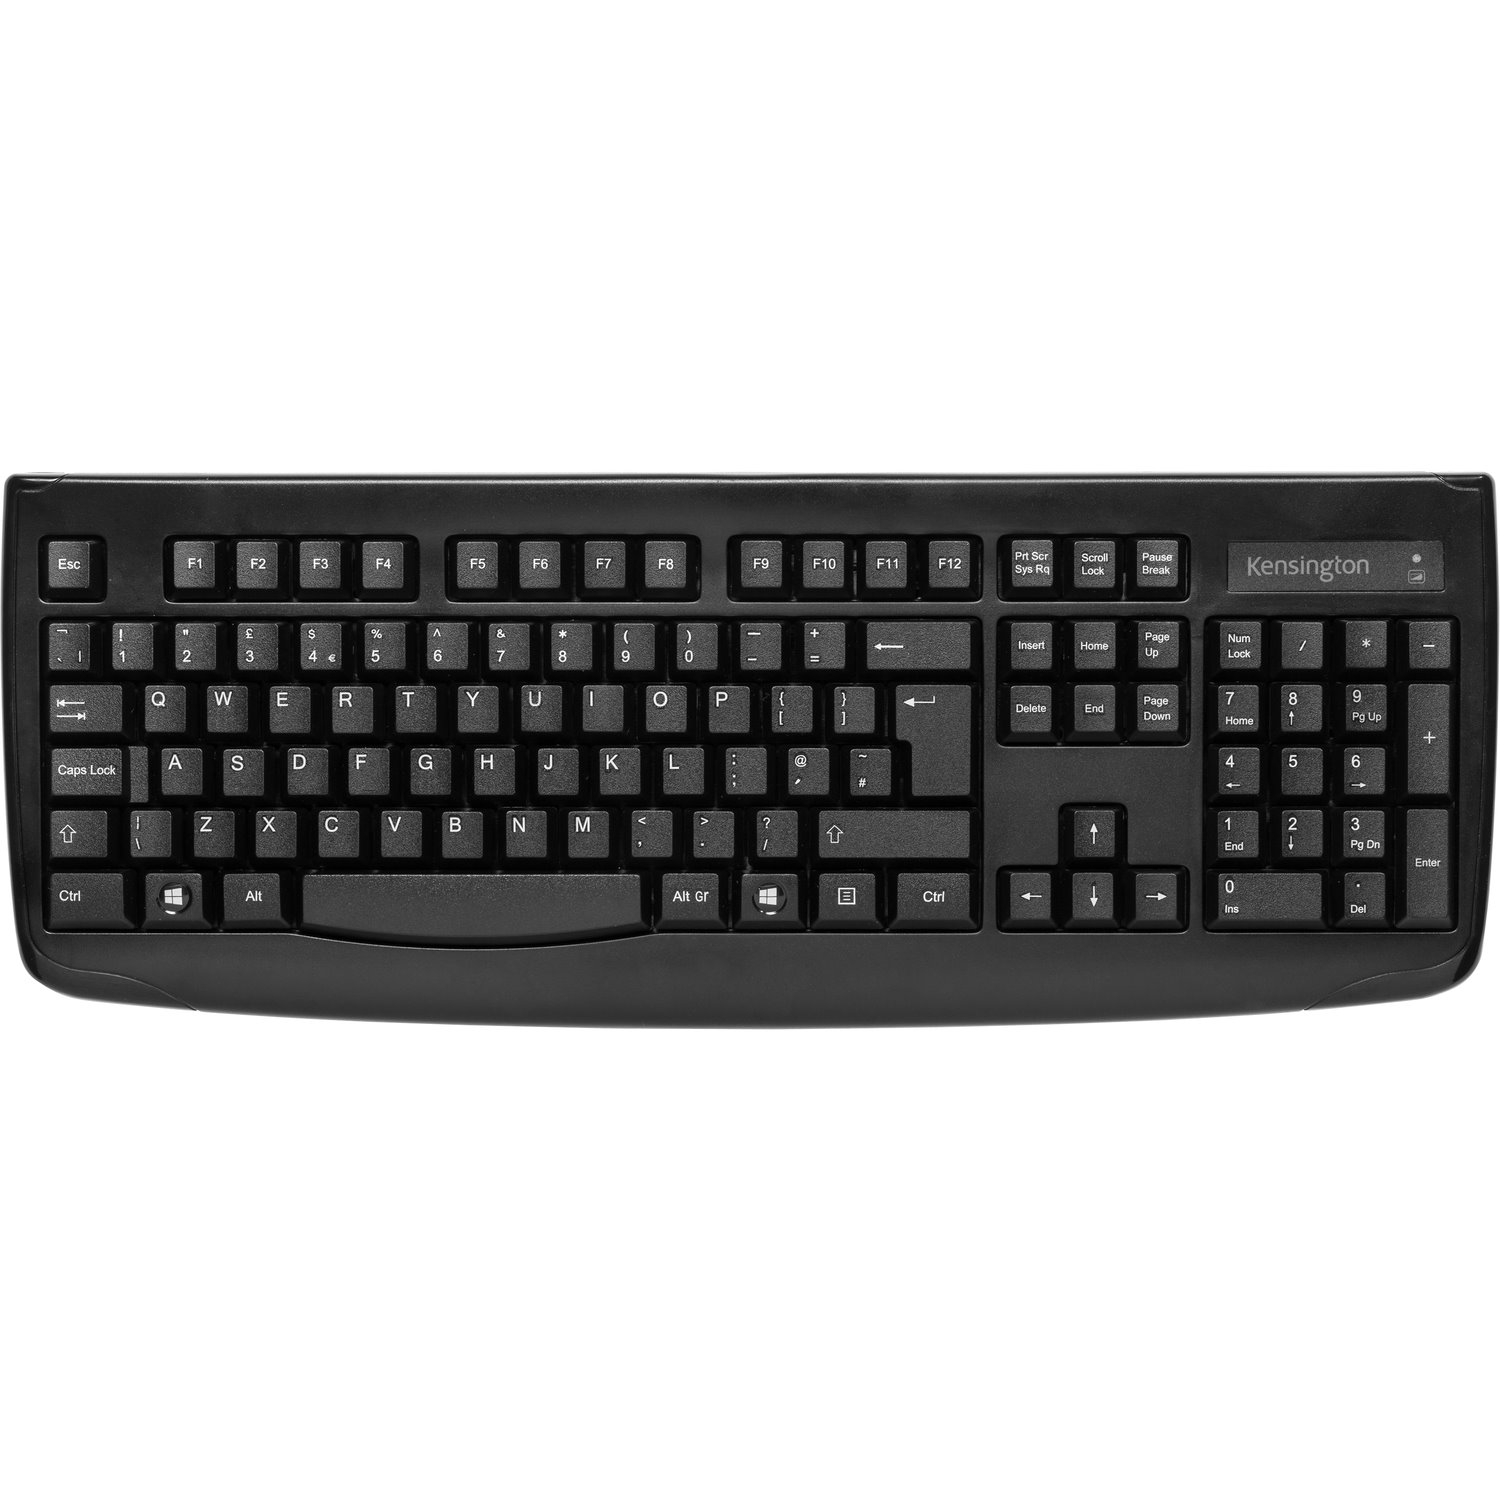 Kensington Pro Fit Keyboard - Wireless Connectivity - USB Interface - QWERTY Layout - Black